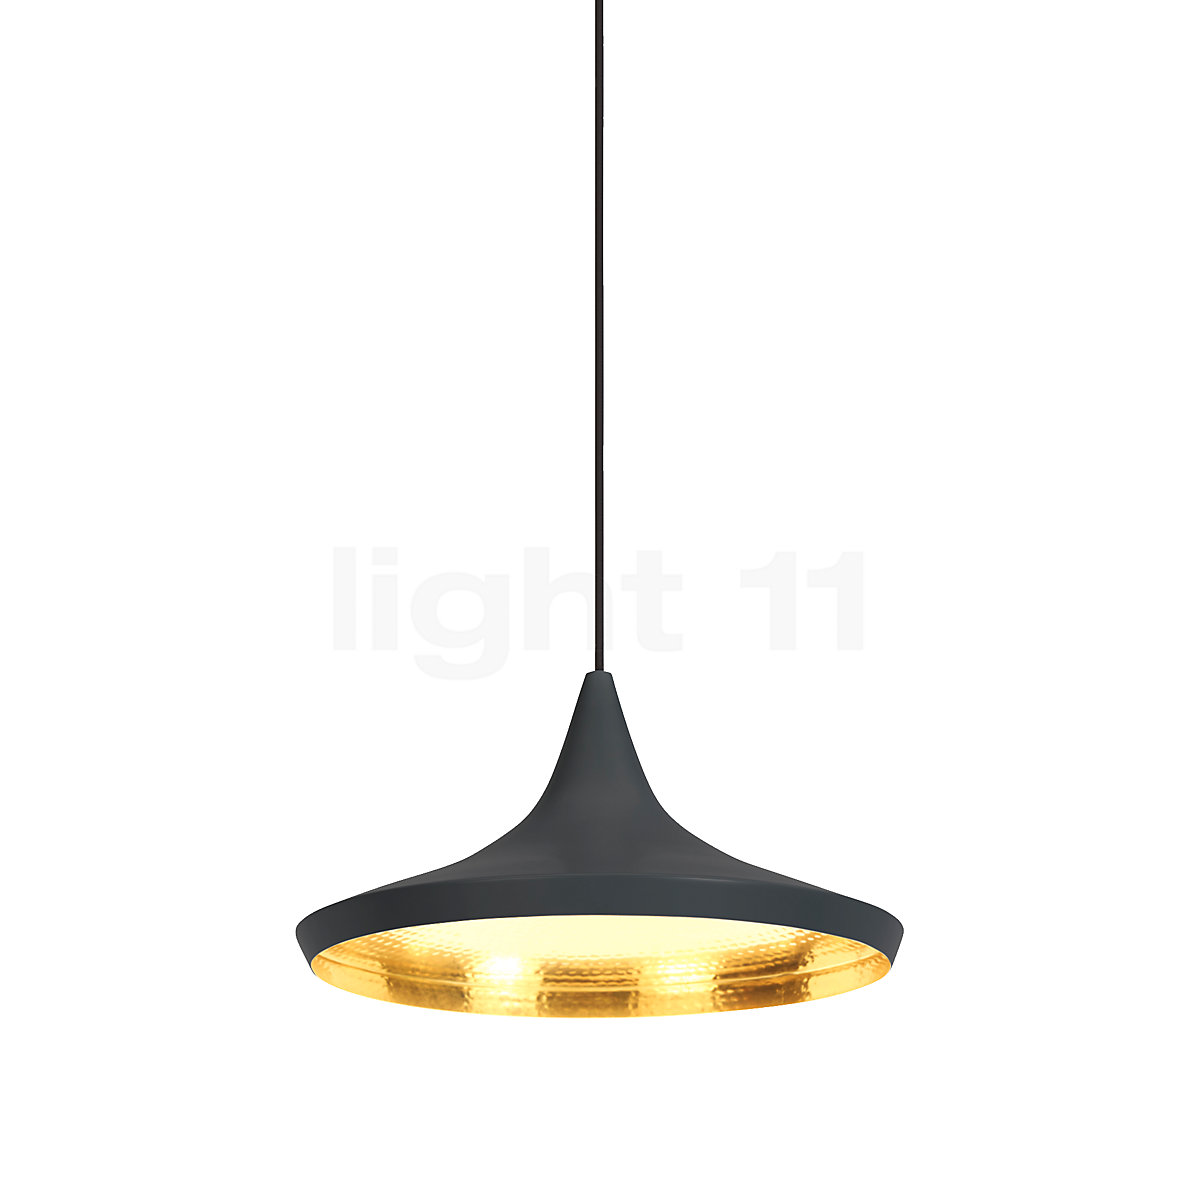 Buy Wide Pendant Light at light11.eu